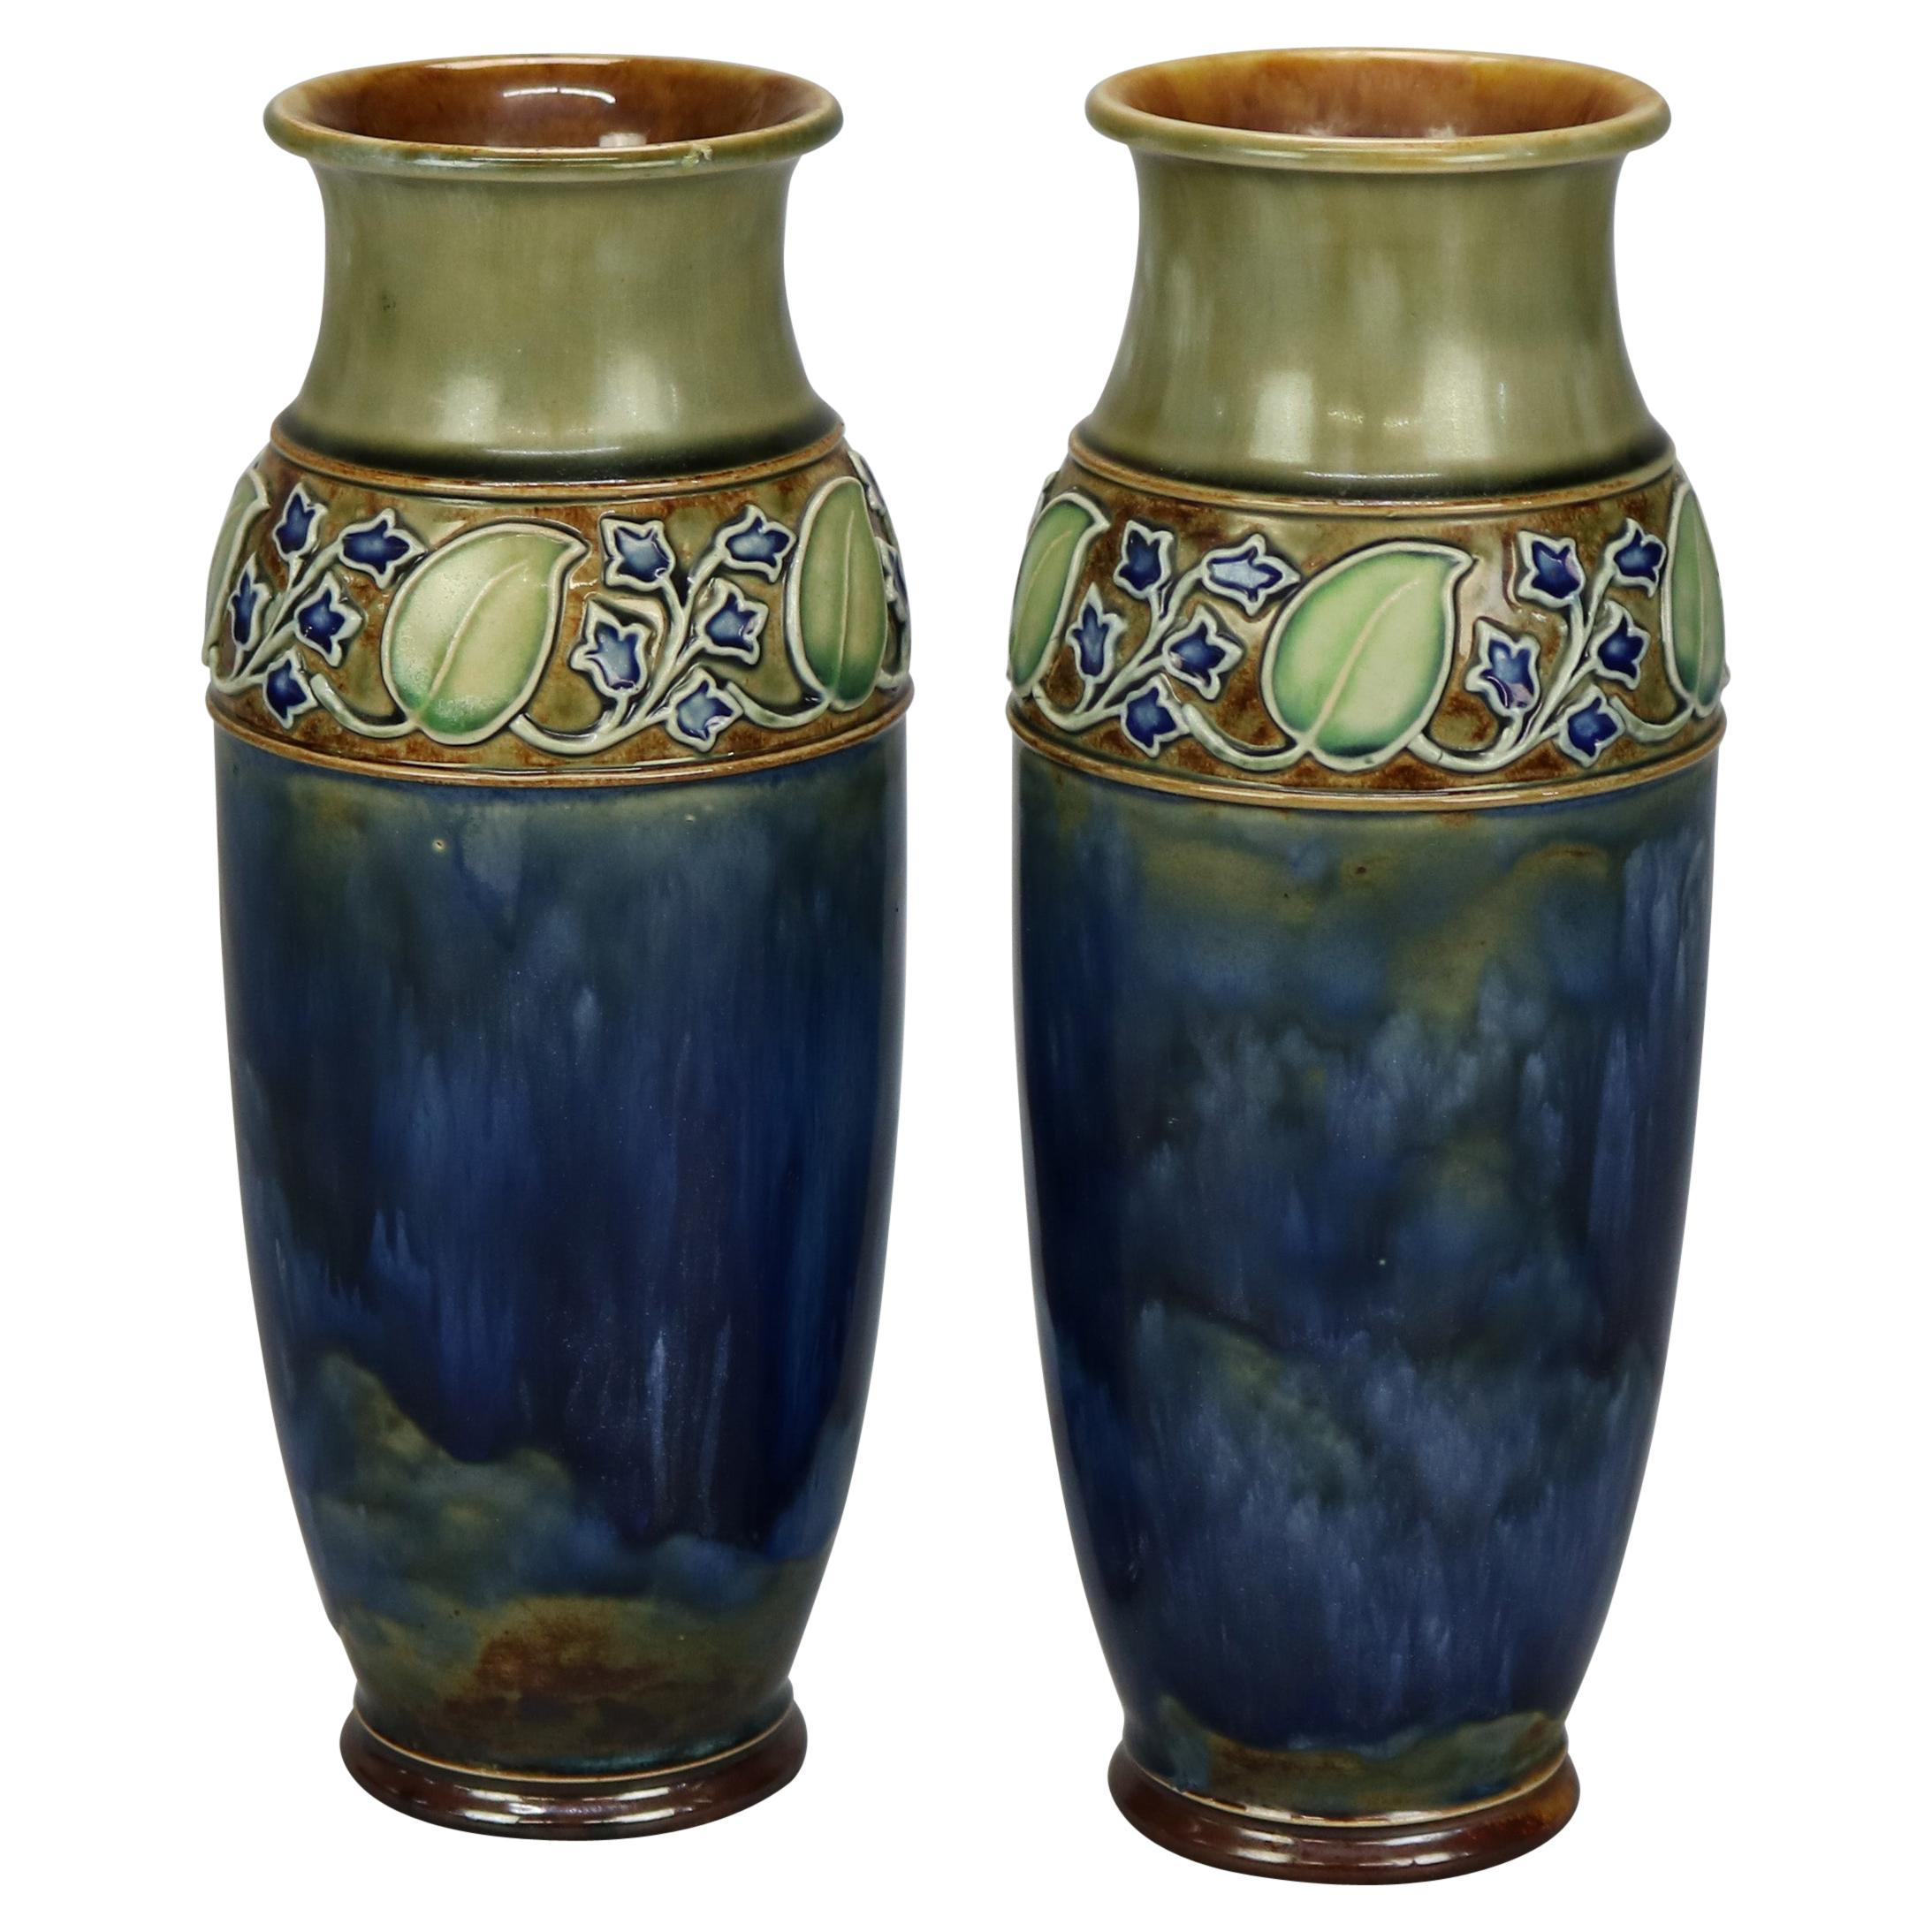 Antique Pair of Royal Doulton Arts & Crafts Pottery Vases, Circa 1910